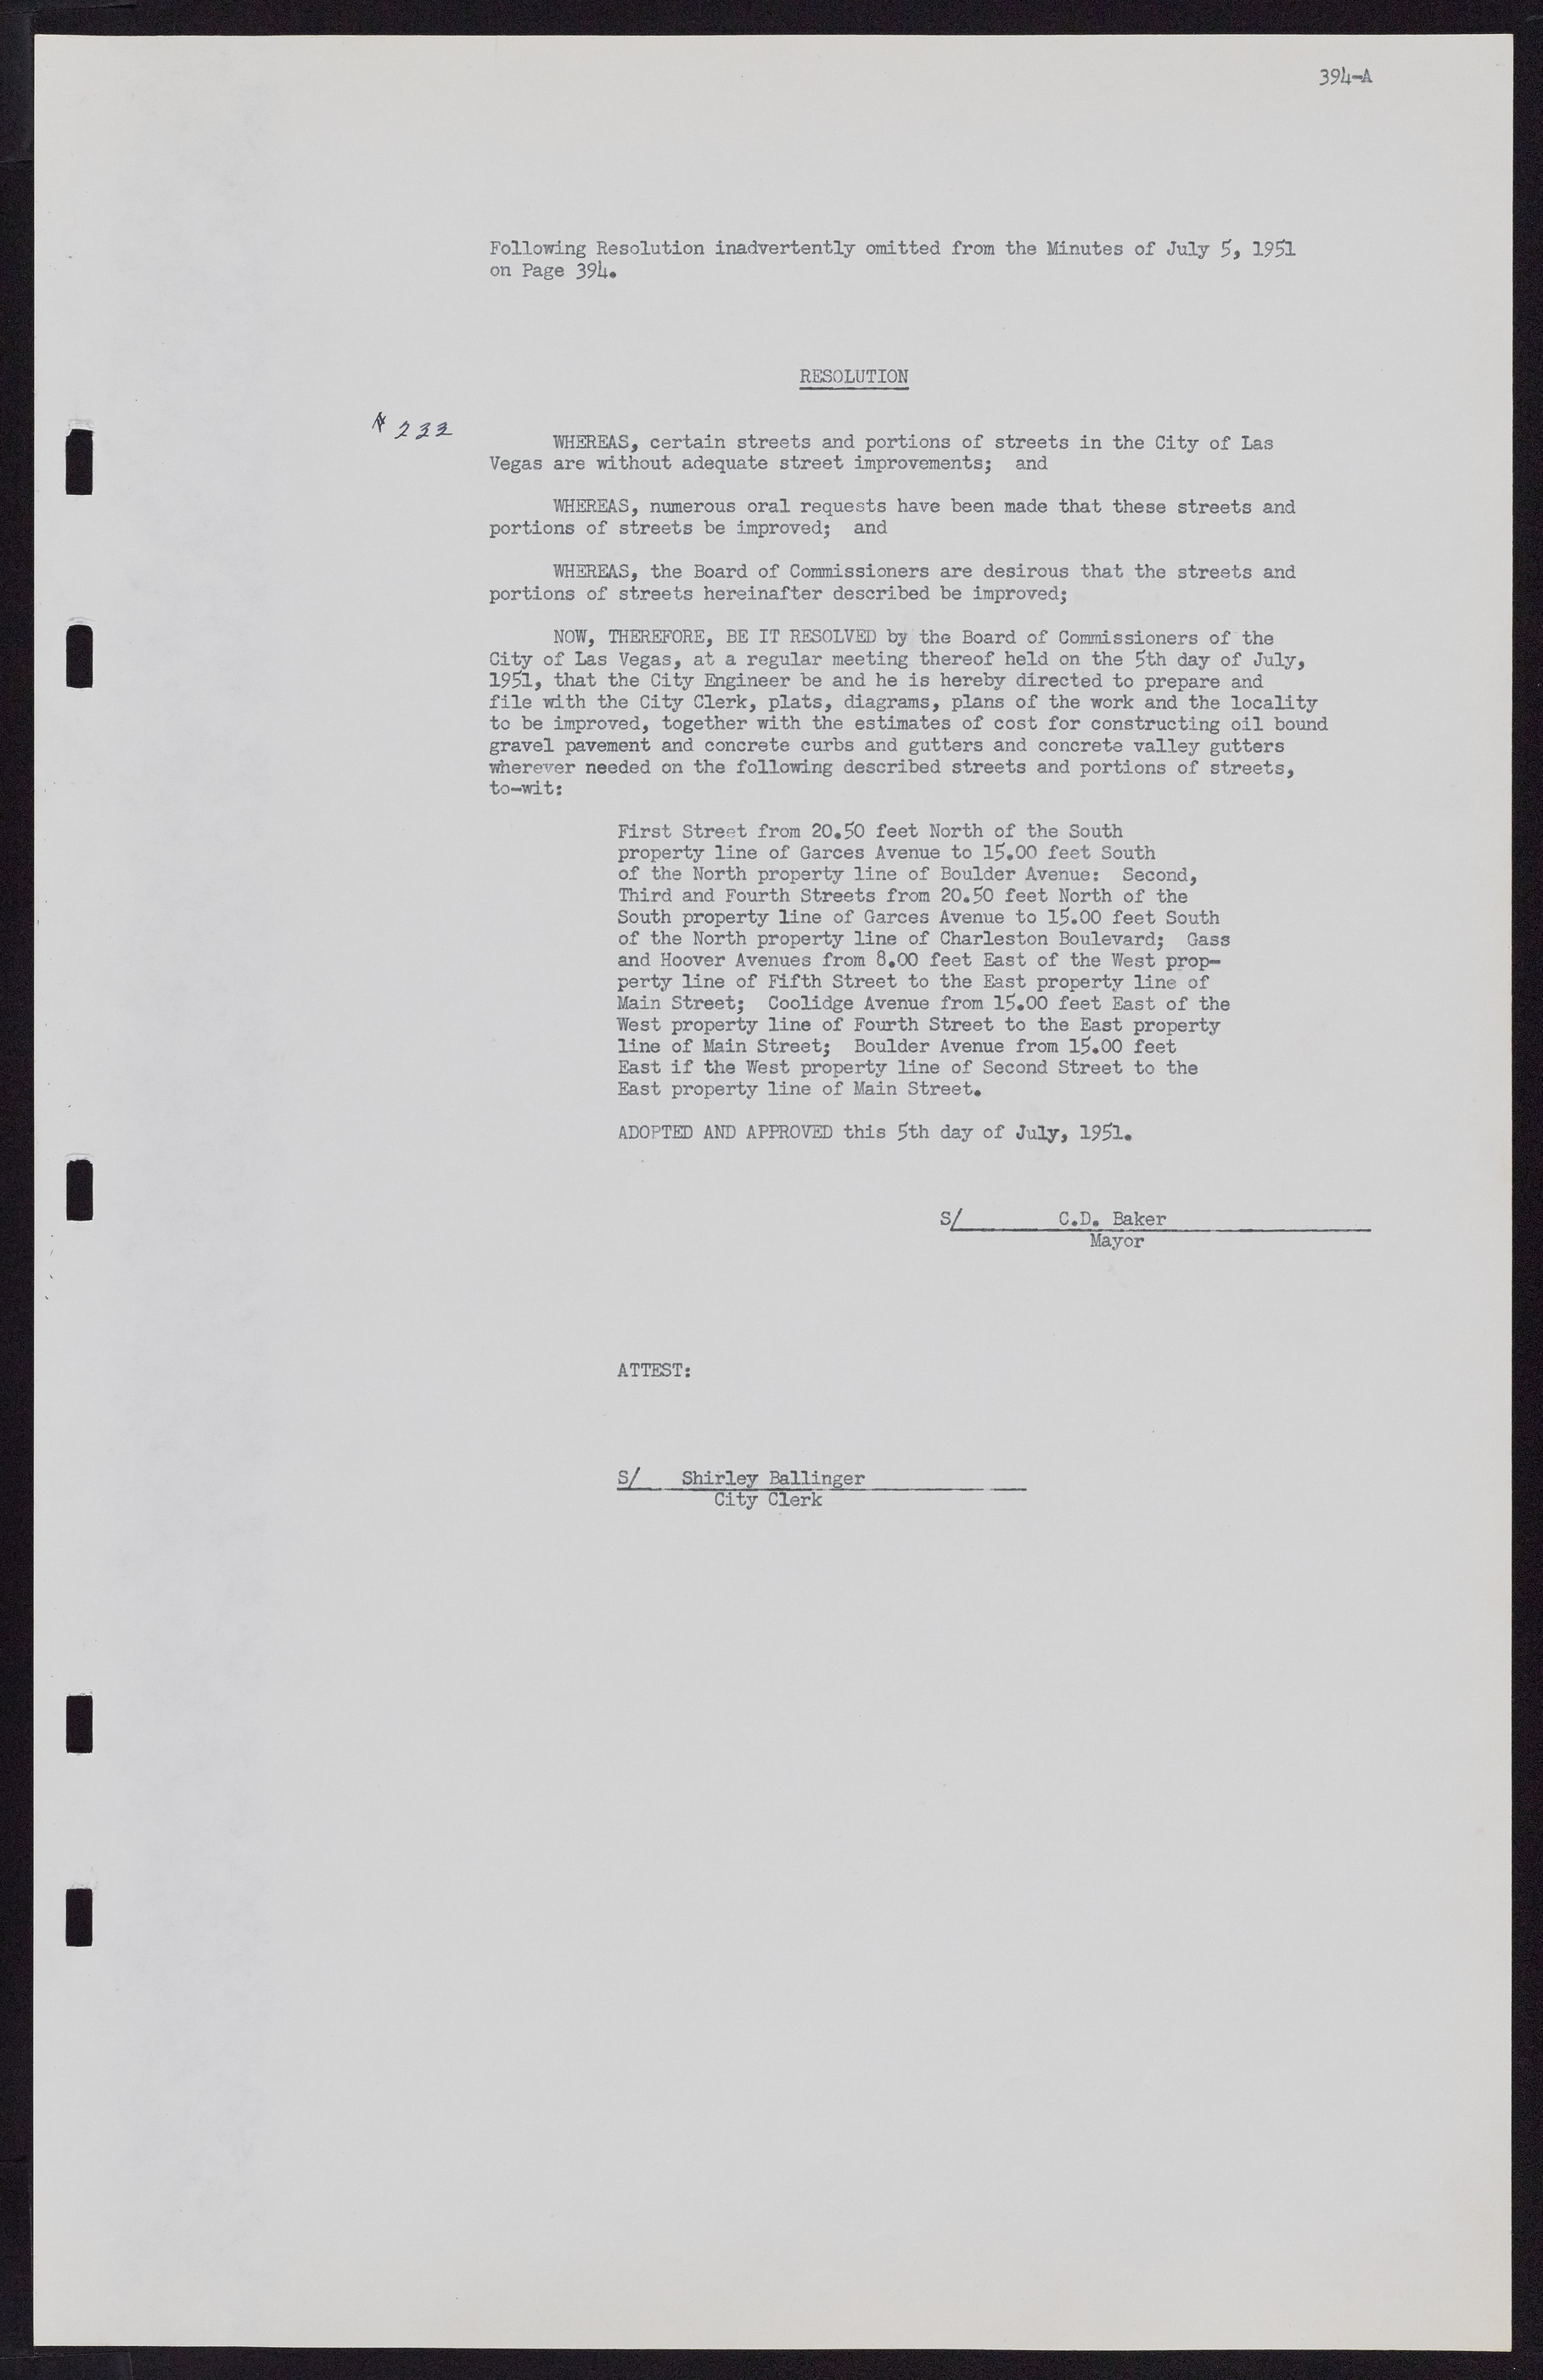 Las Vegas City Commission Minutes, November 7, 1949 to May 21, 1952, lvc000007-409